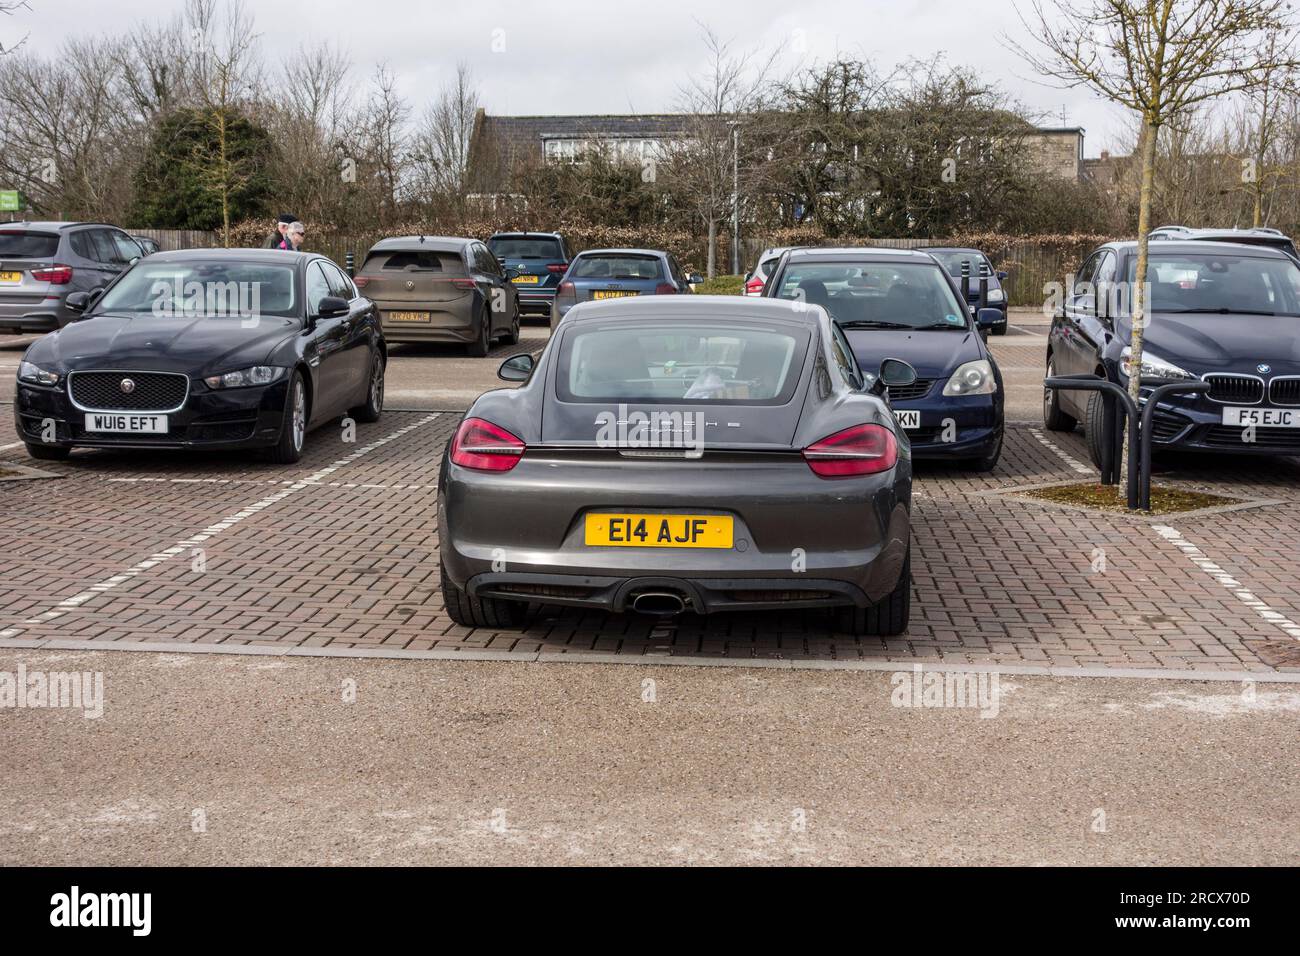 Obtructive parking in car park, Wiltshire, UK Stock Photo